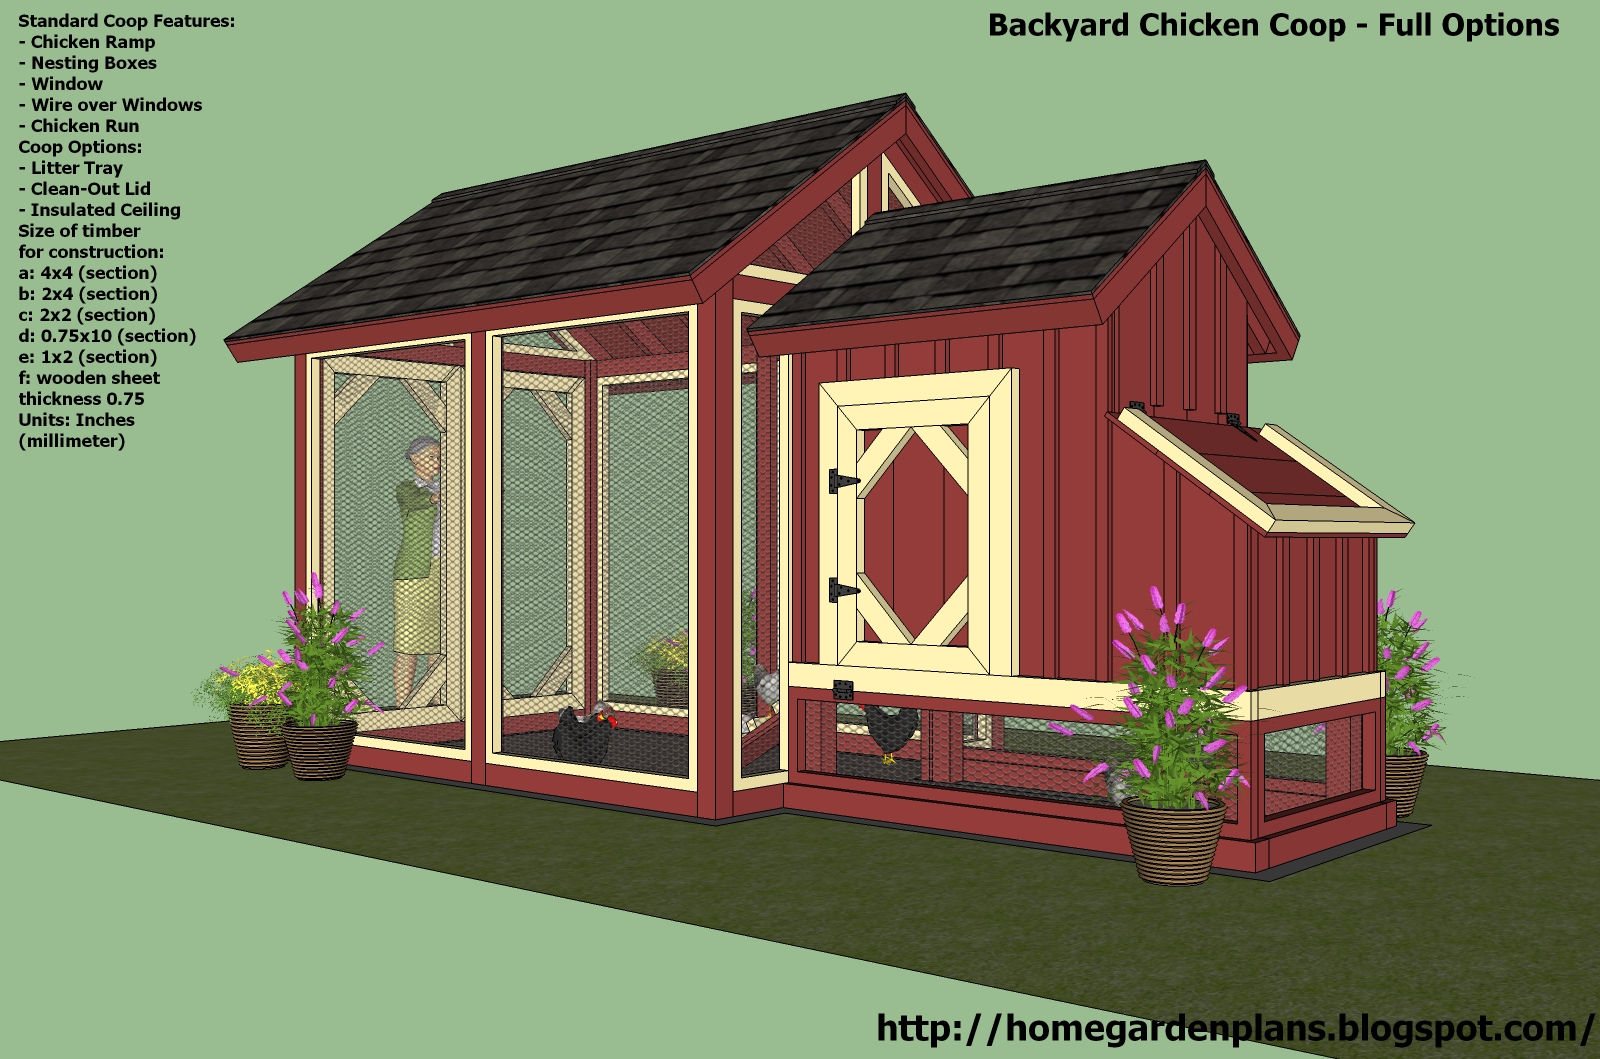 home garden plans: S101 - Chicken Coop Plans Construction ...